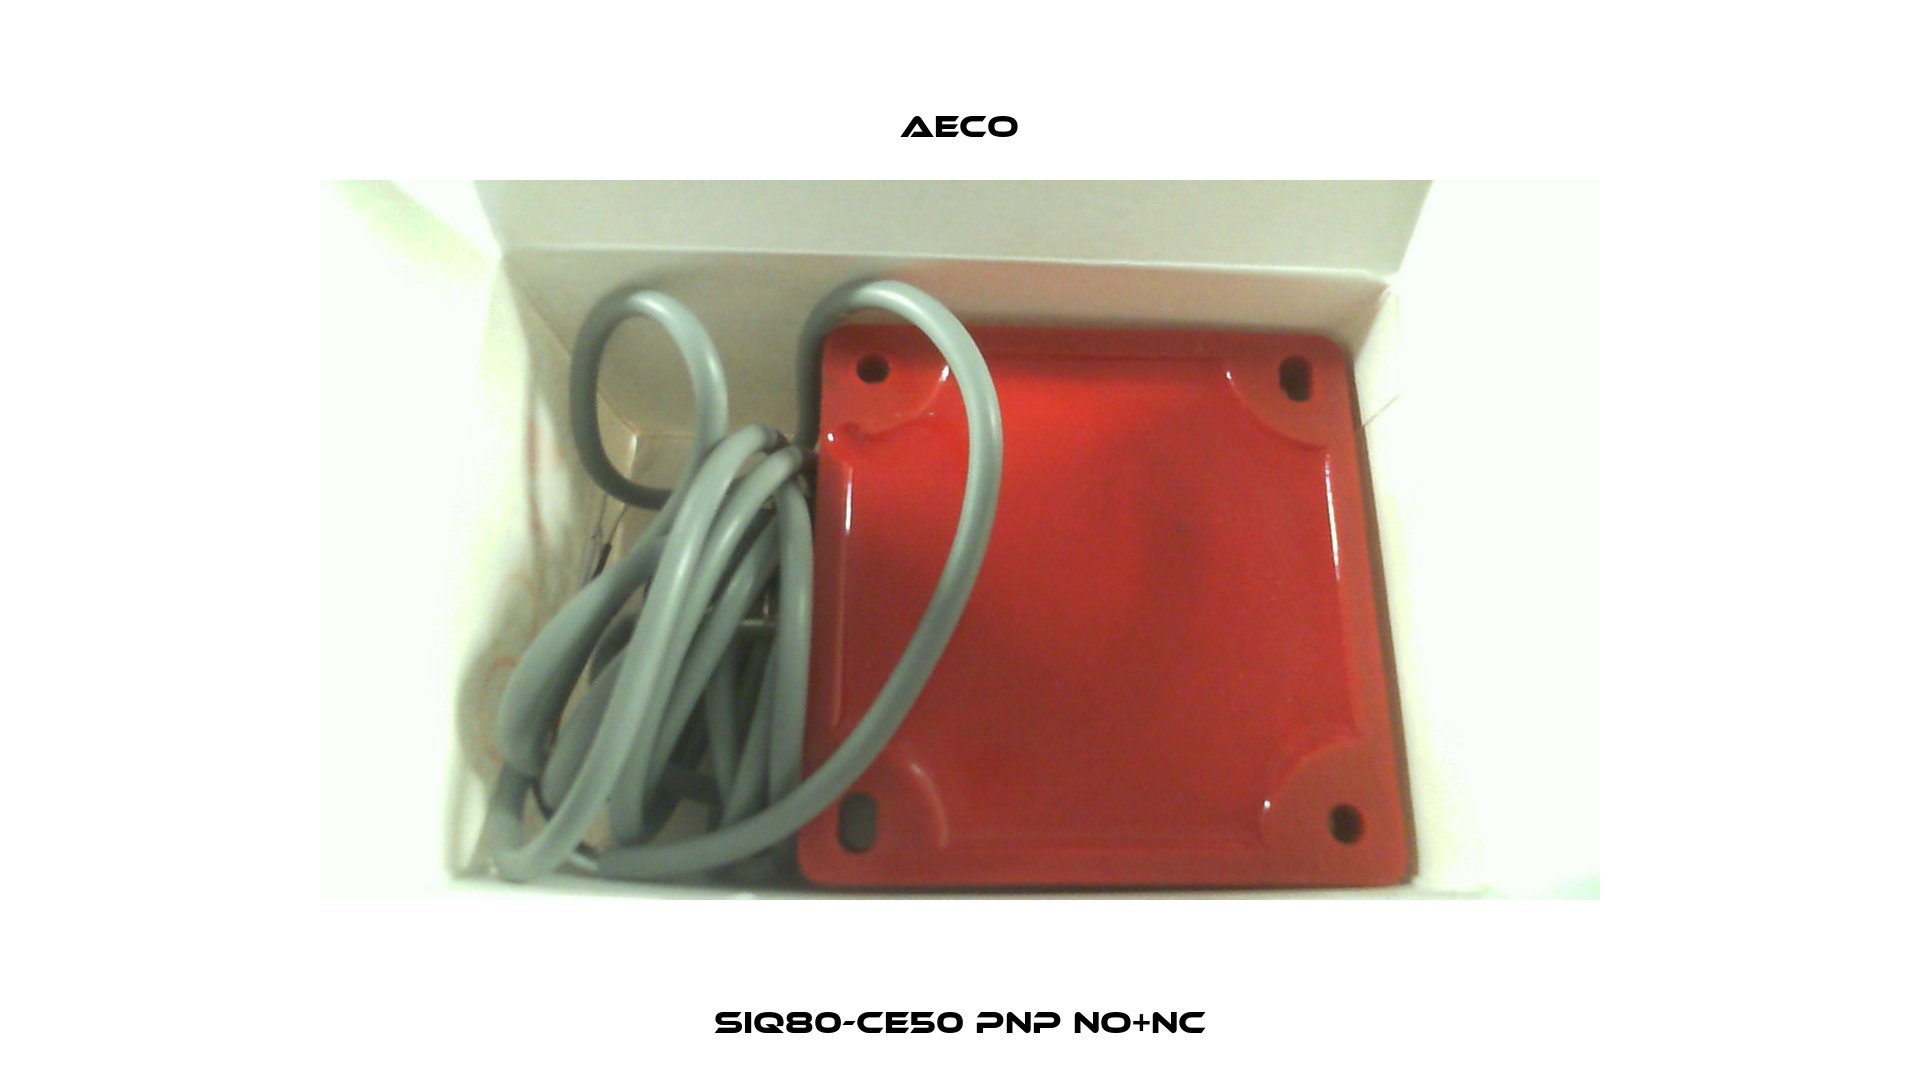 SIQ80-CE50 PNP NO+NC Aeco